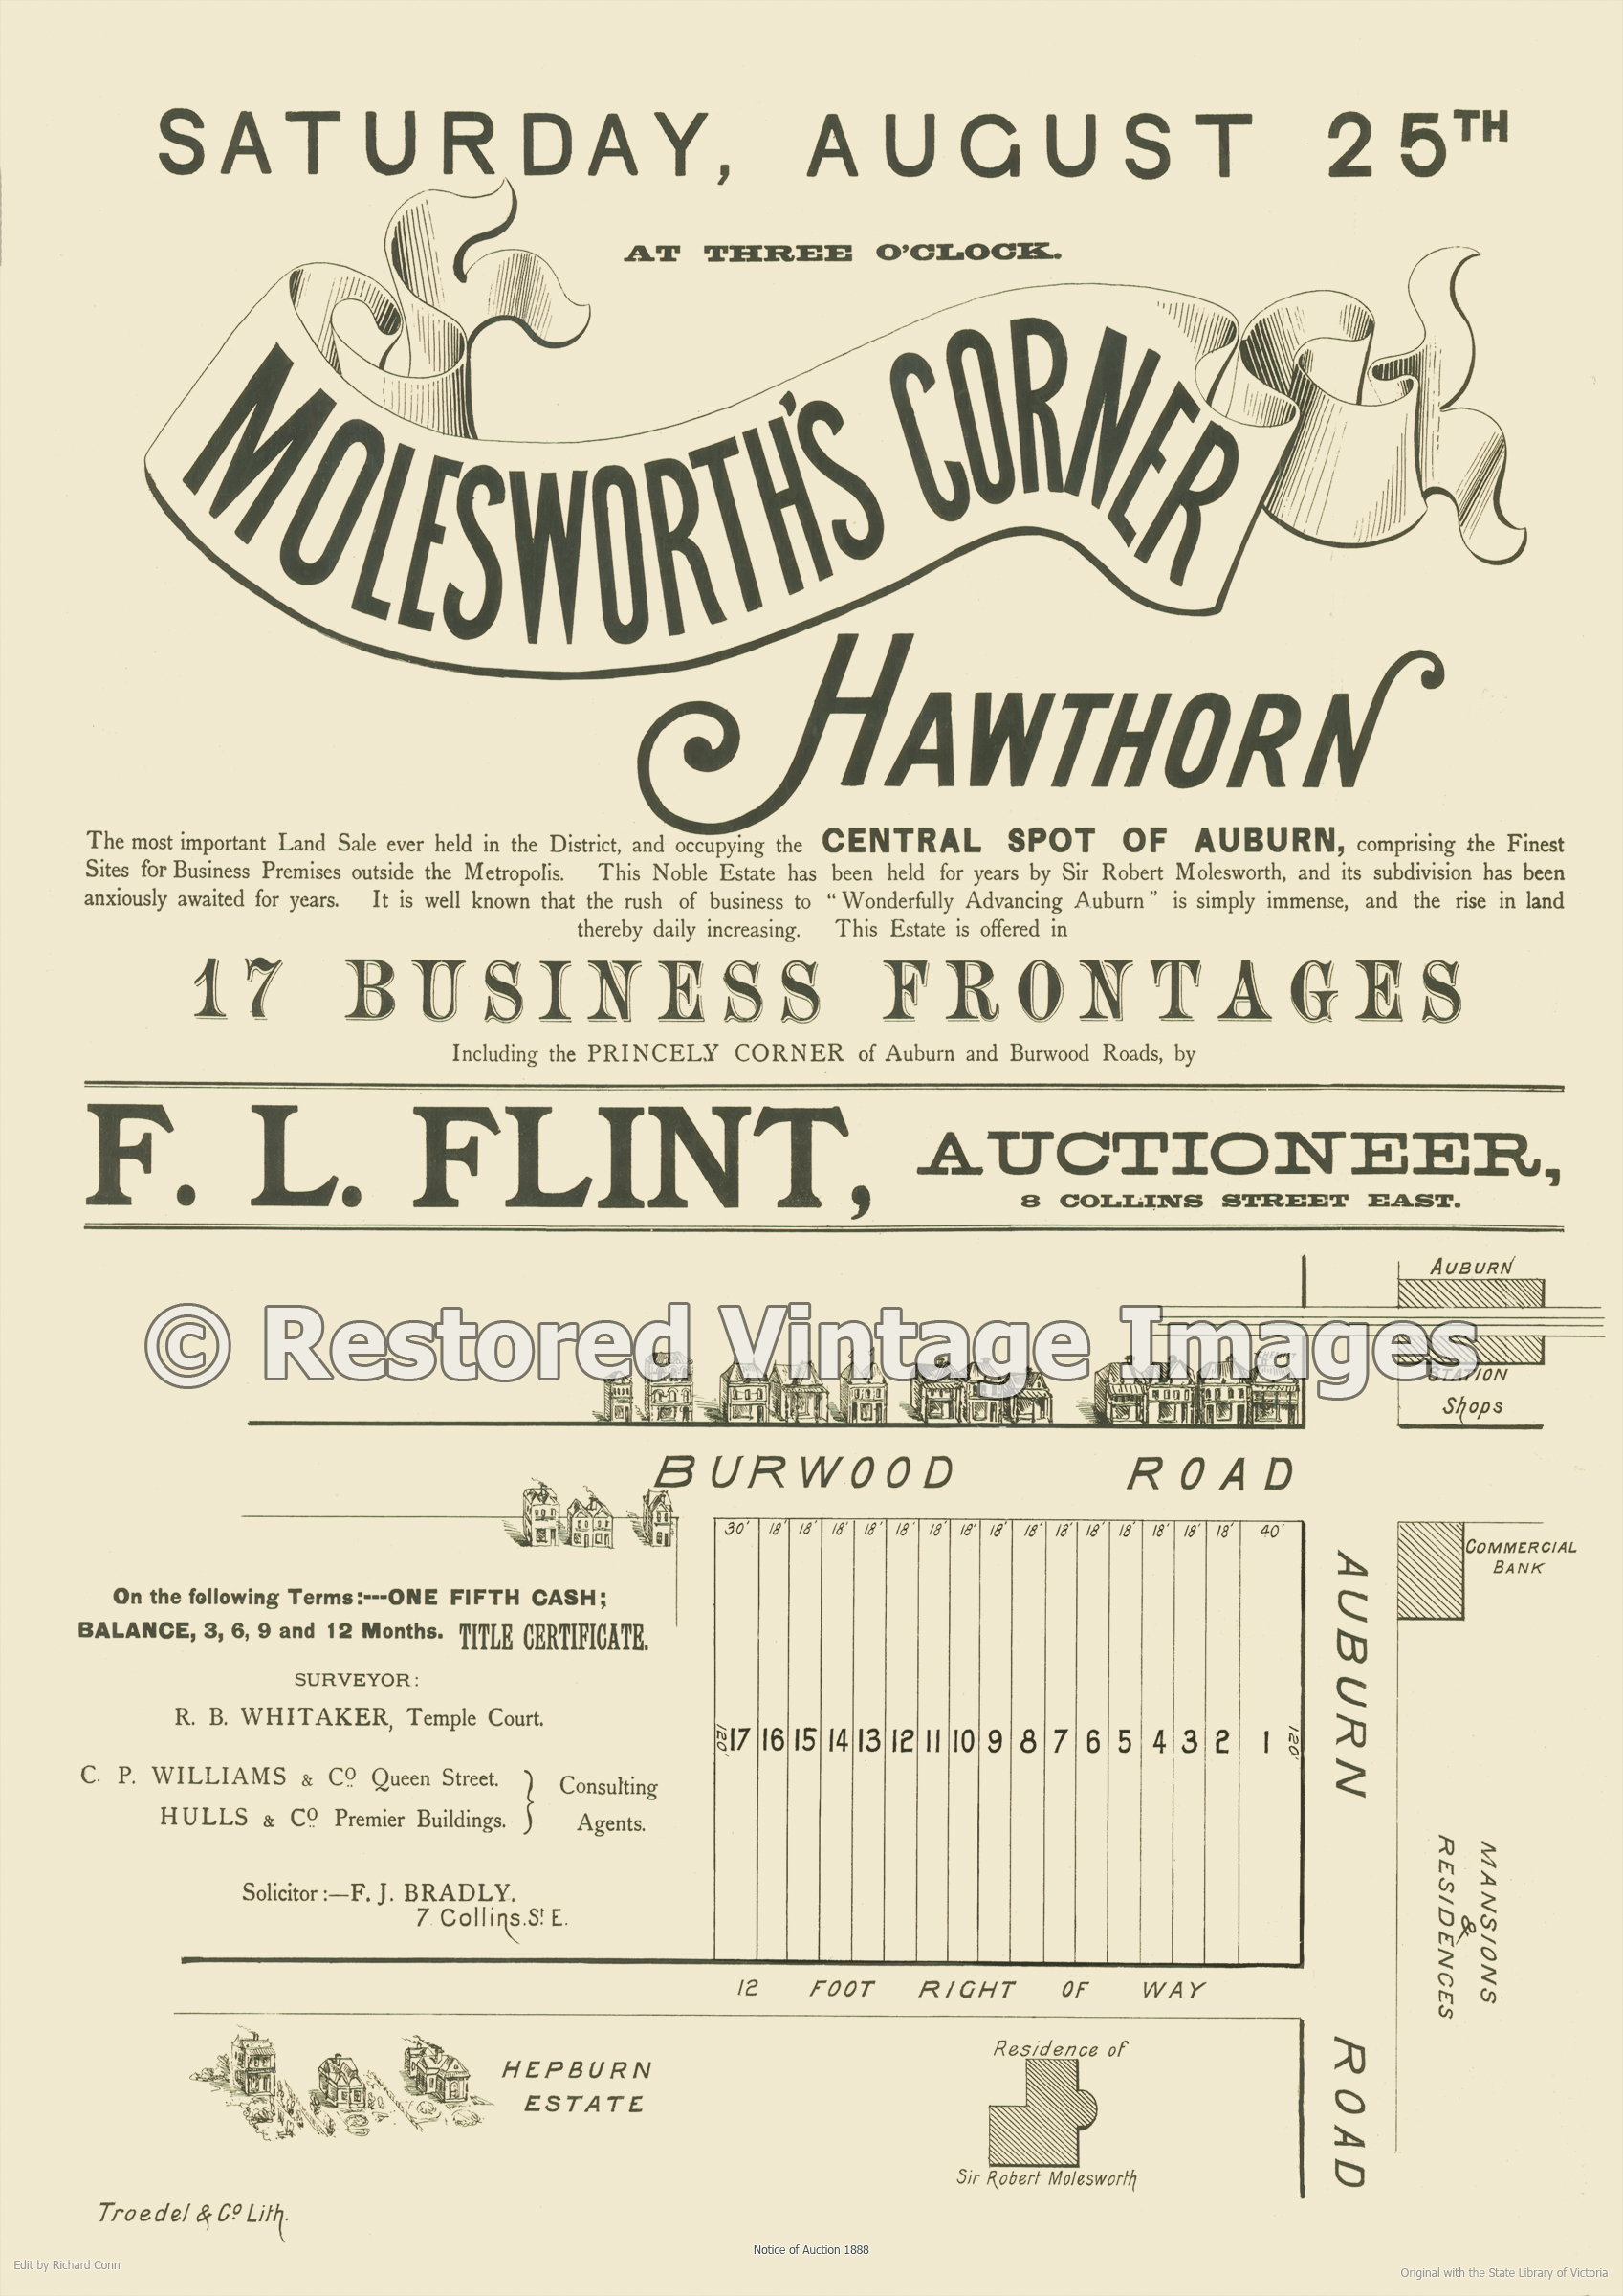 Molesworth’s Corner 25th August 1888 – Hawthorn